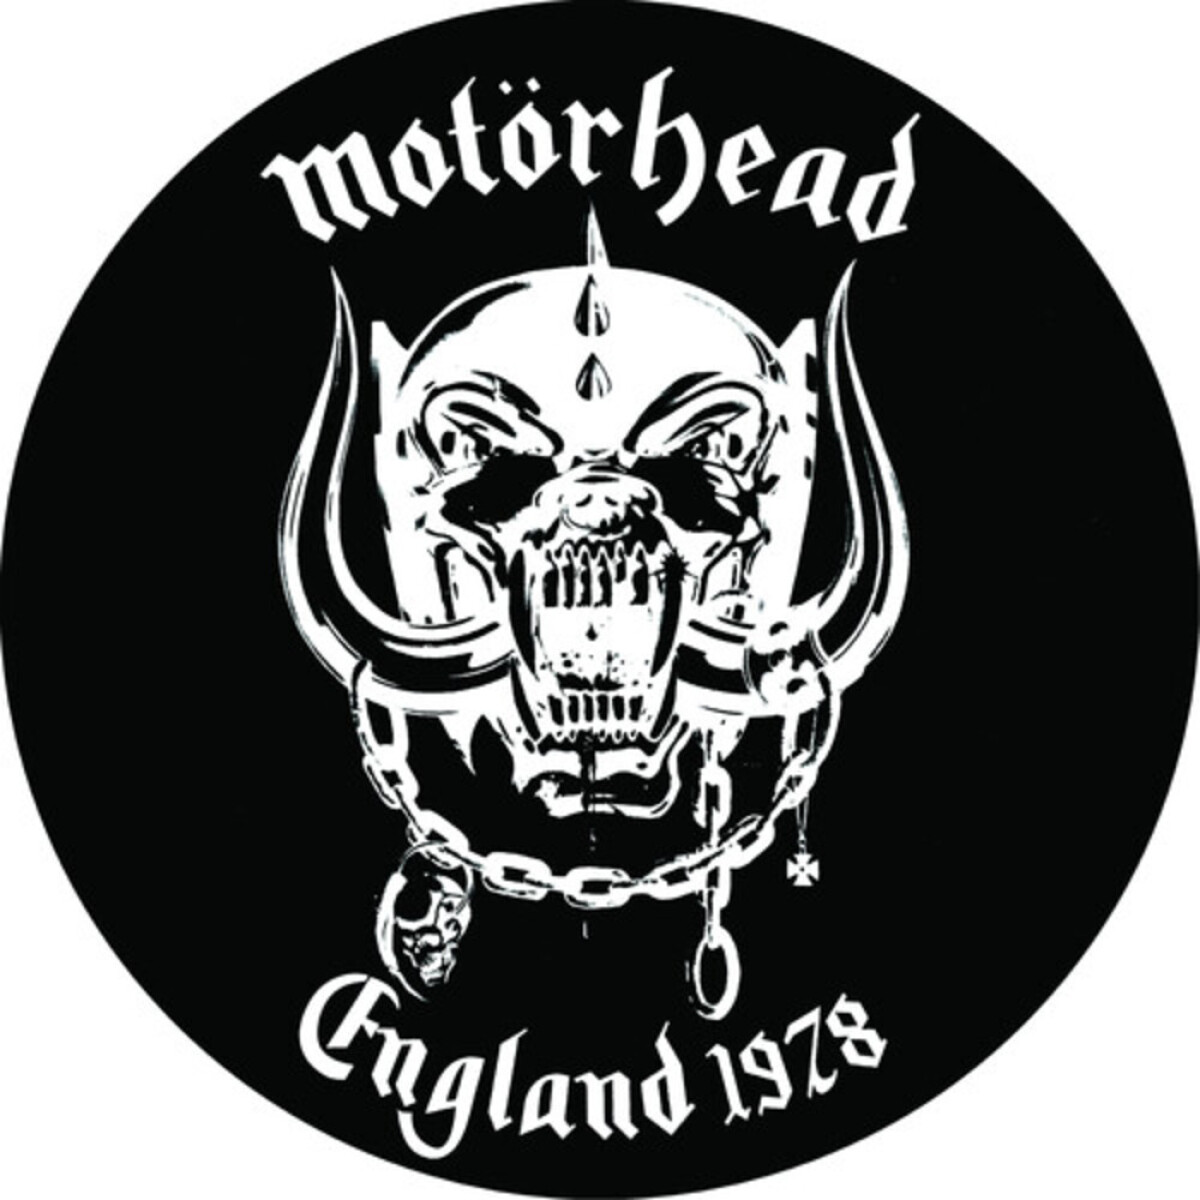 Motorhead - England 1978 - Picture Disc Vinyl 